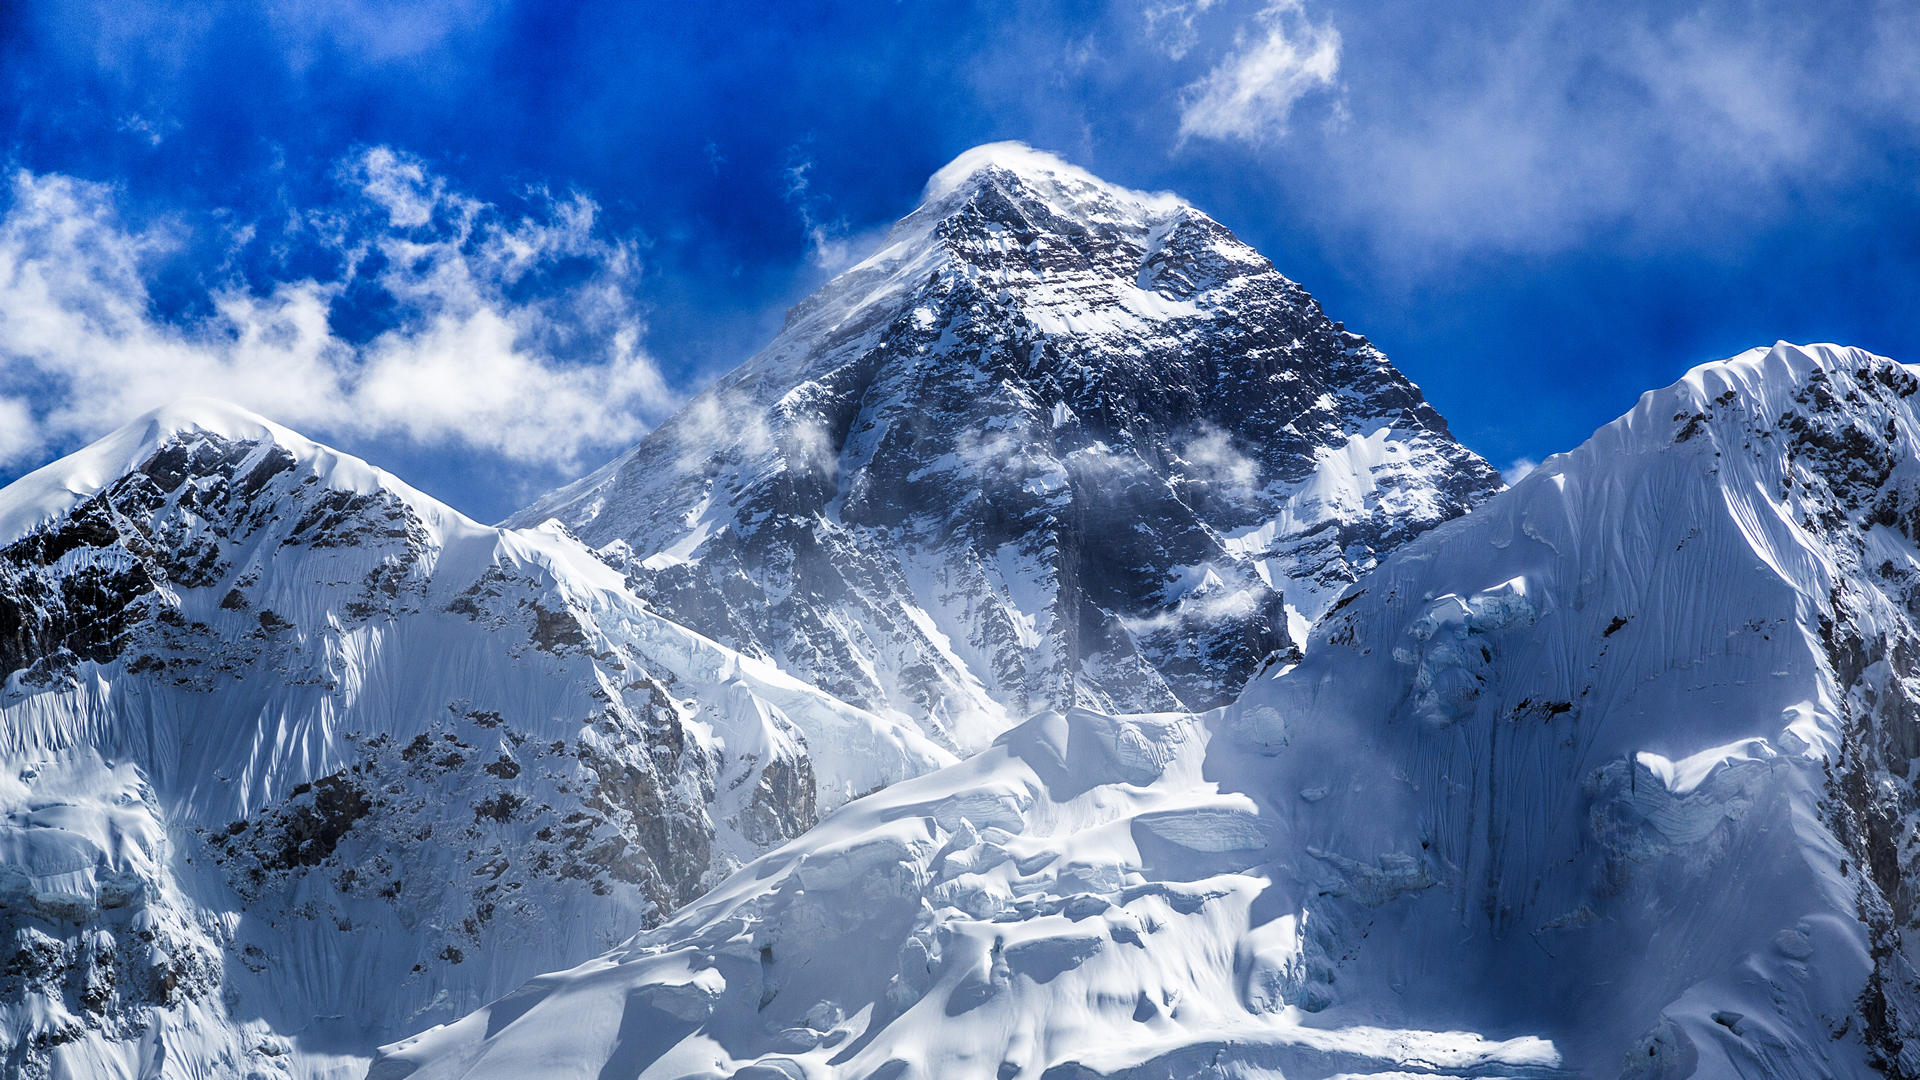 Edmund Hillary and Tenzing Norgay reach Everest summit | HISTORY